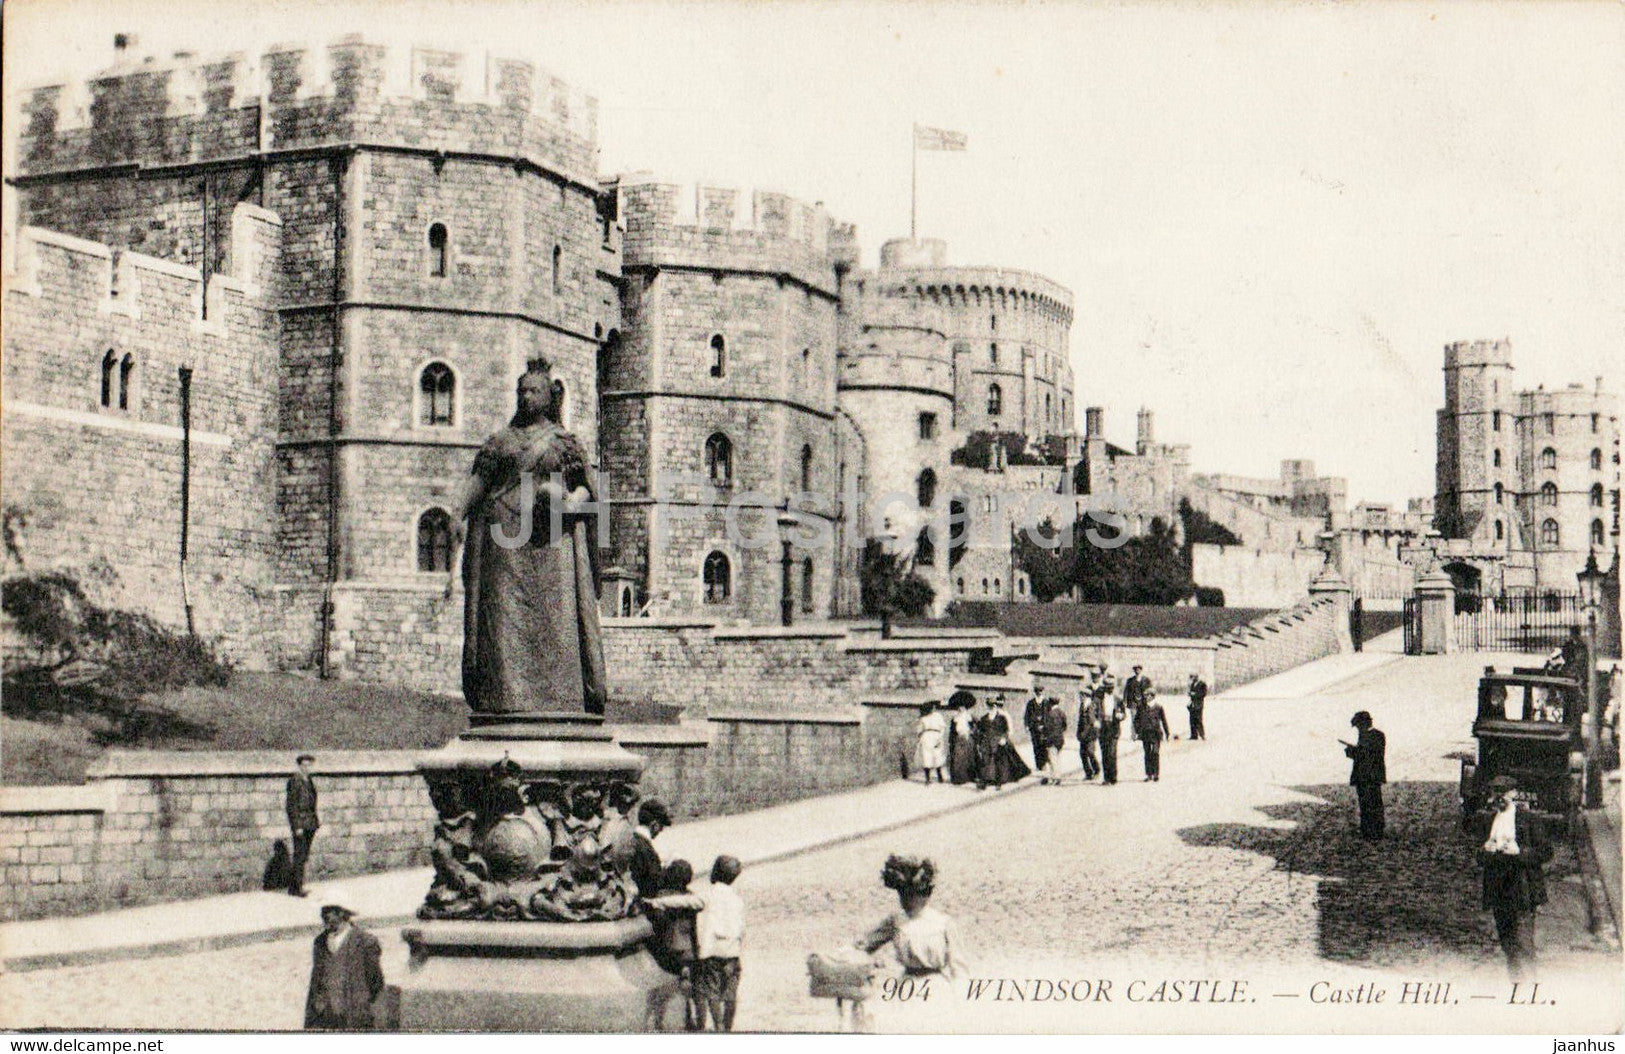 Windsor Castle - Castle Hill - 904 - old postcard - England - United Kingdom - unused - JH Postcards